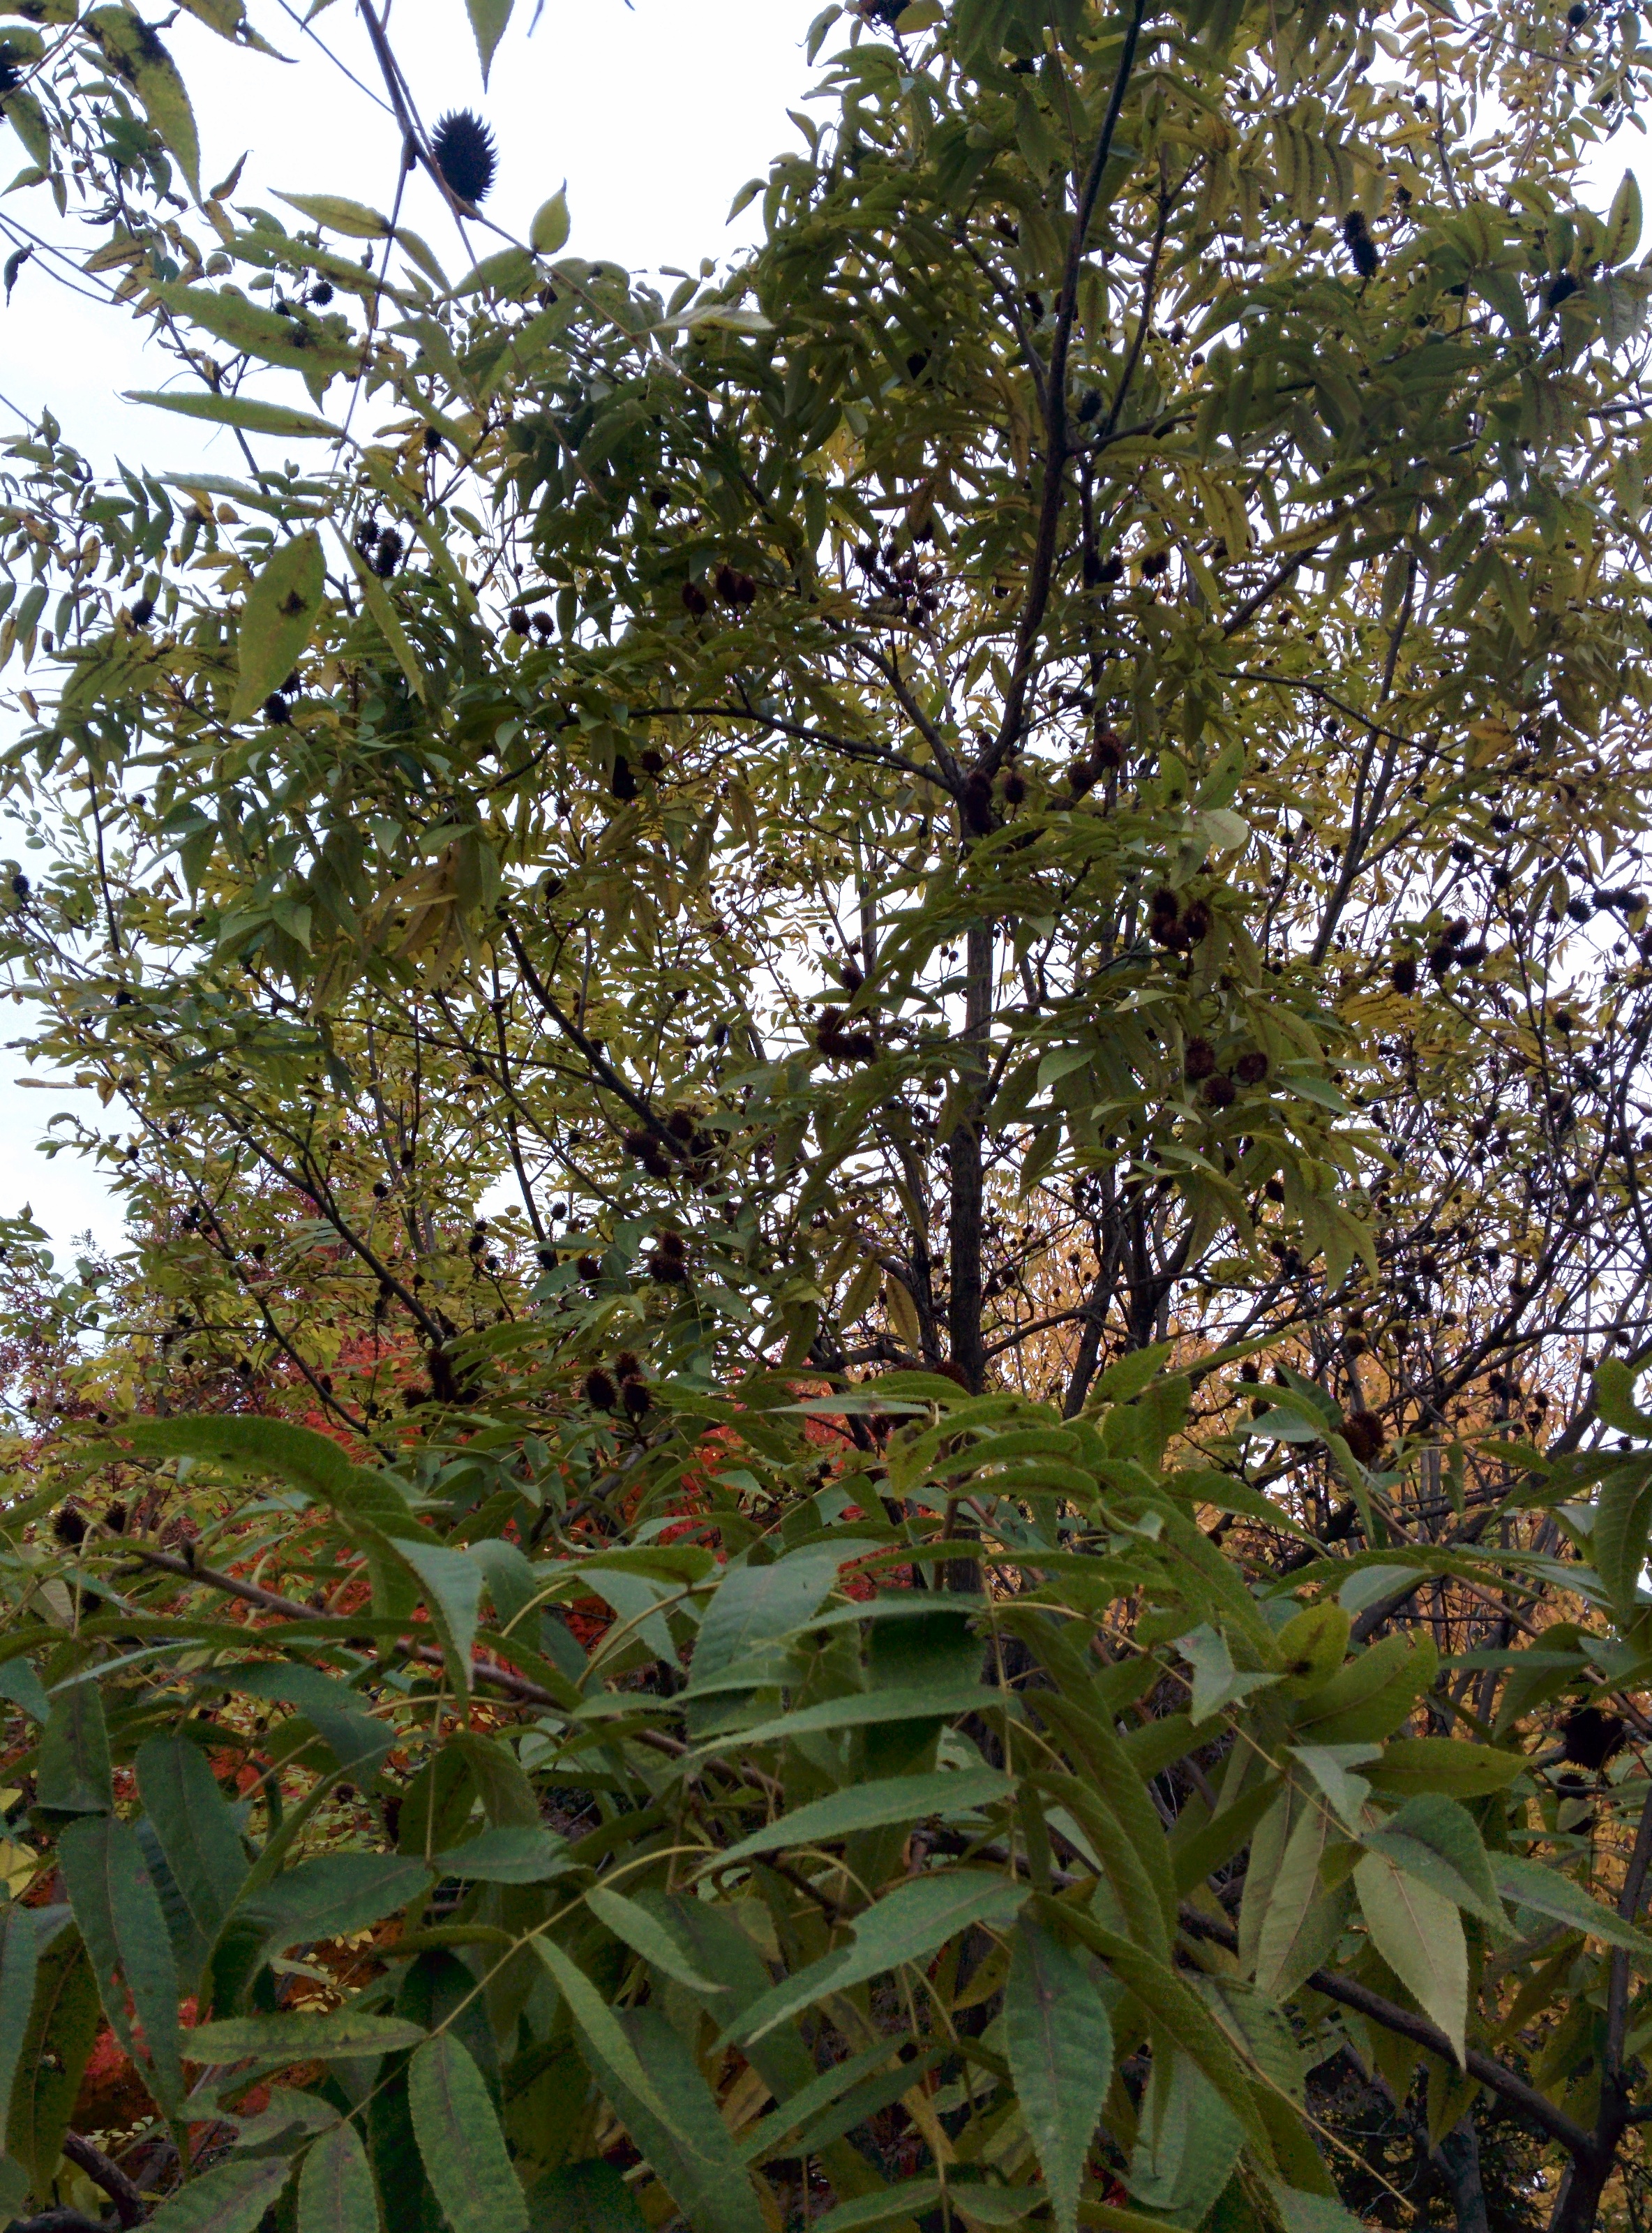 IMG_20151106_145212.jpg 타원형 열매가 짙은 갈색으로 익은 굴피나무